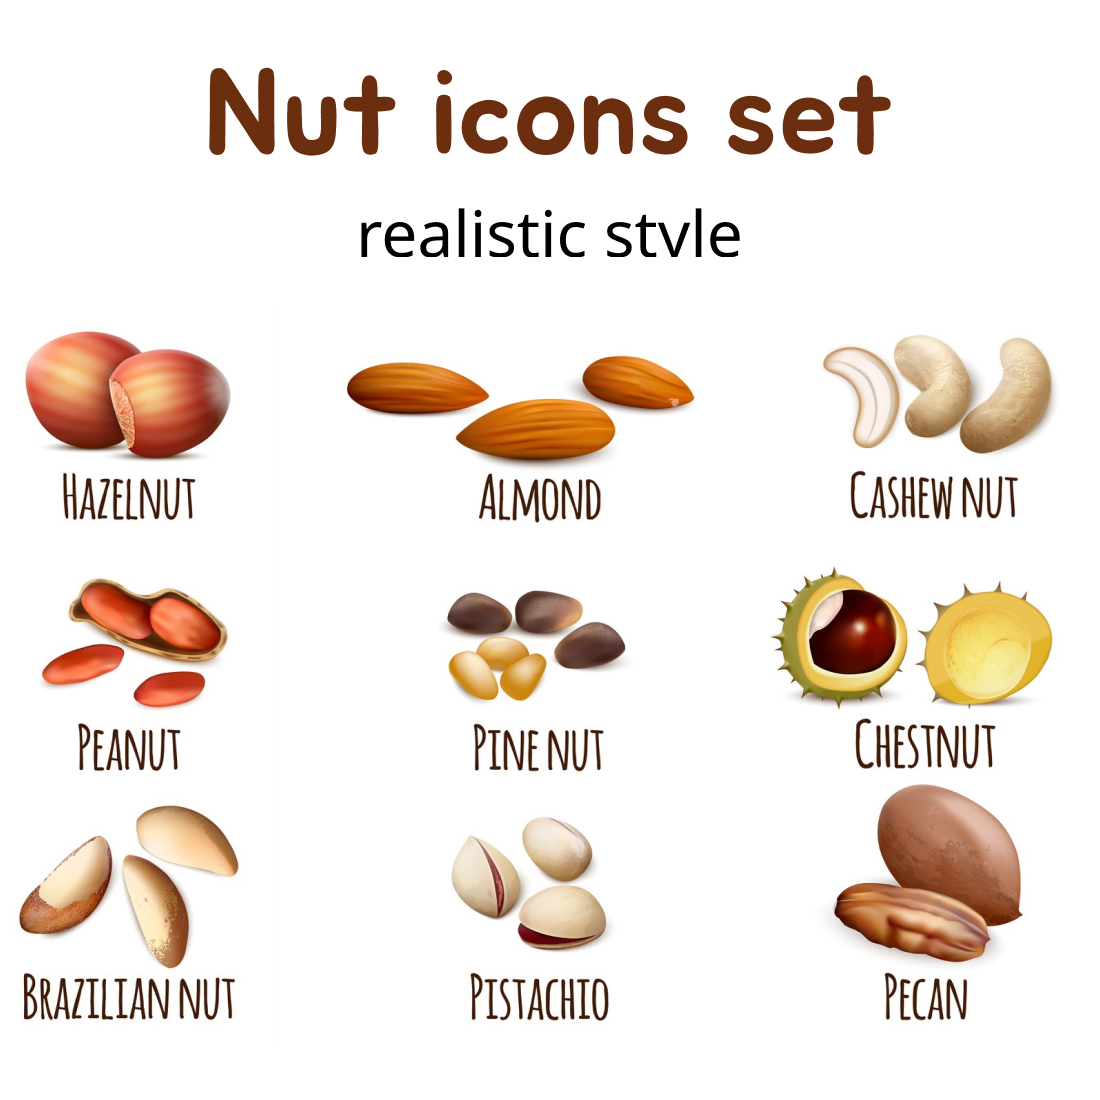 Nut icons set, realistic style.